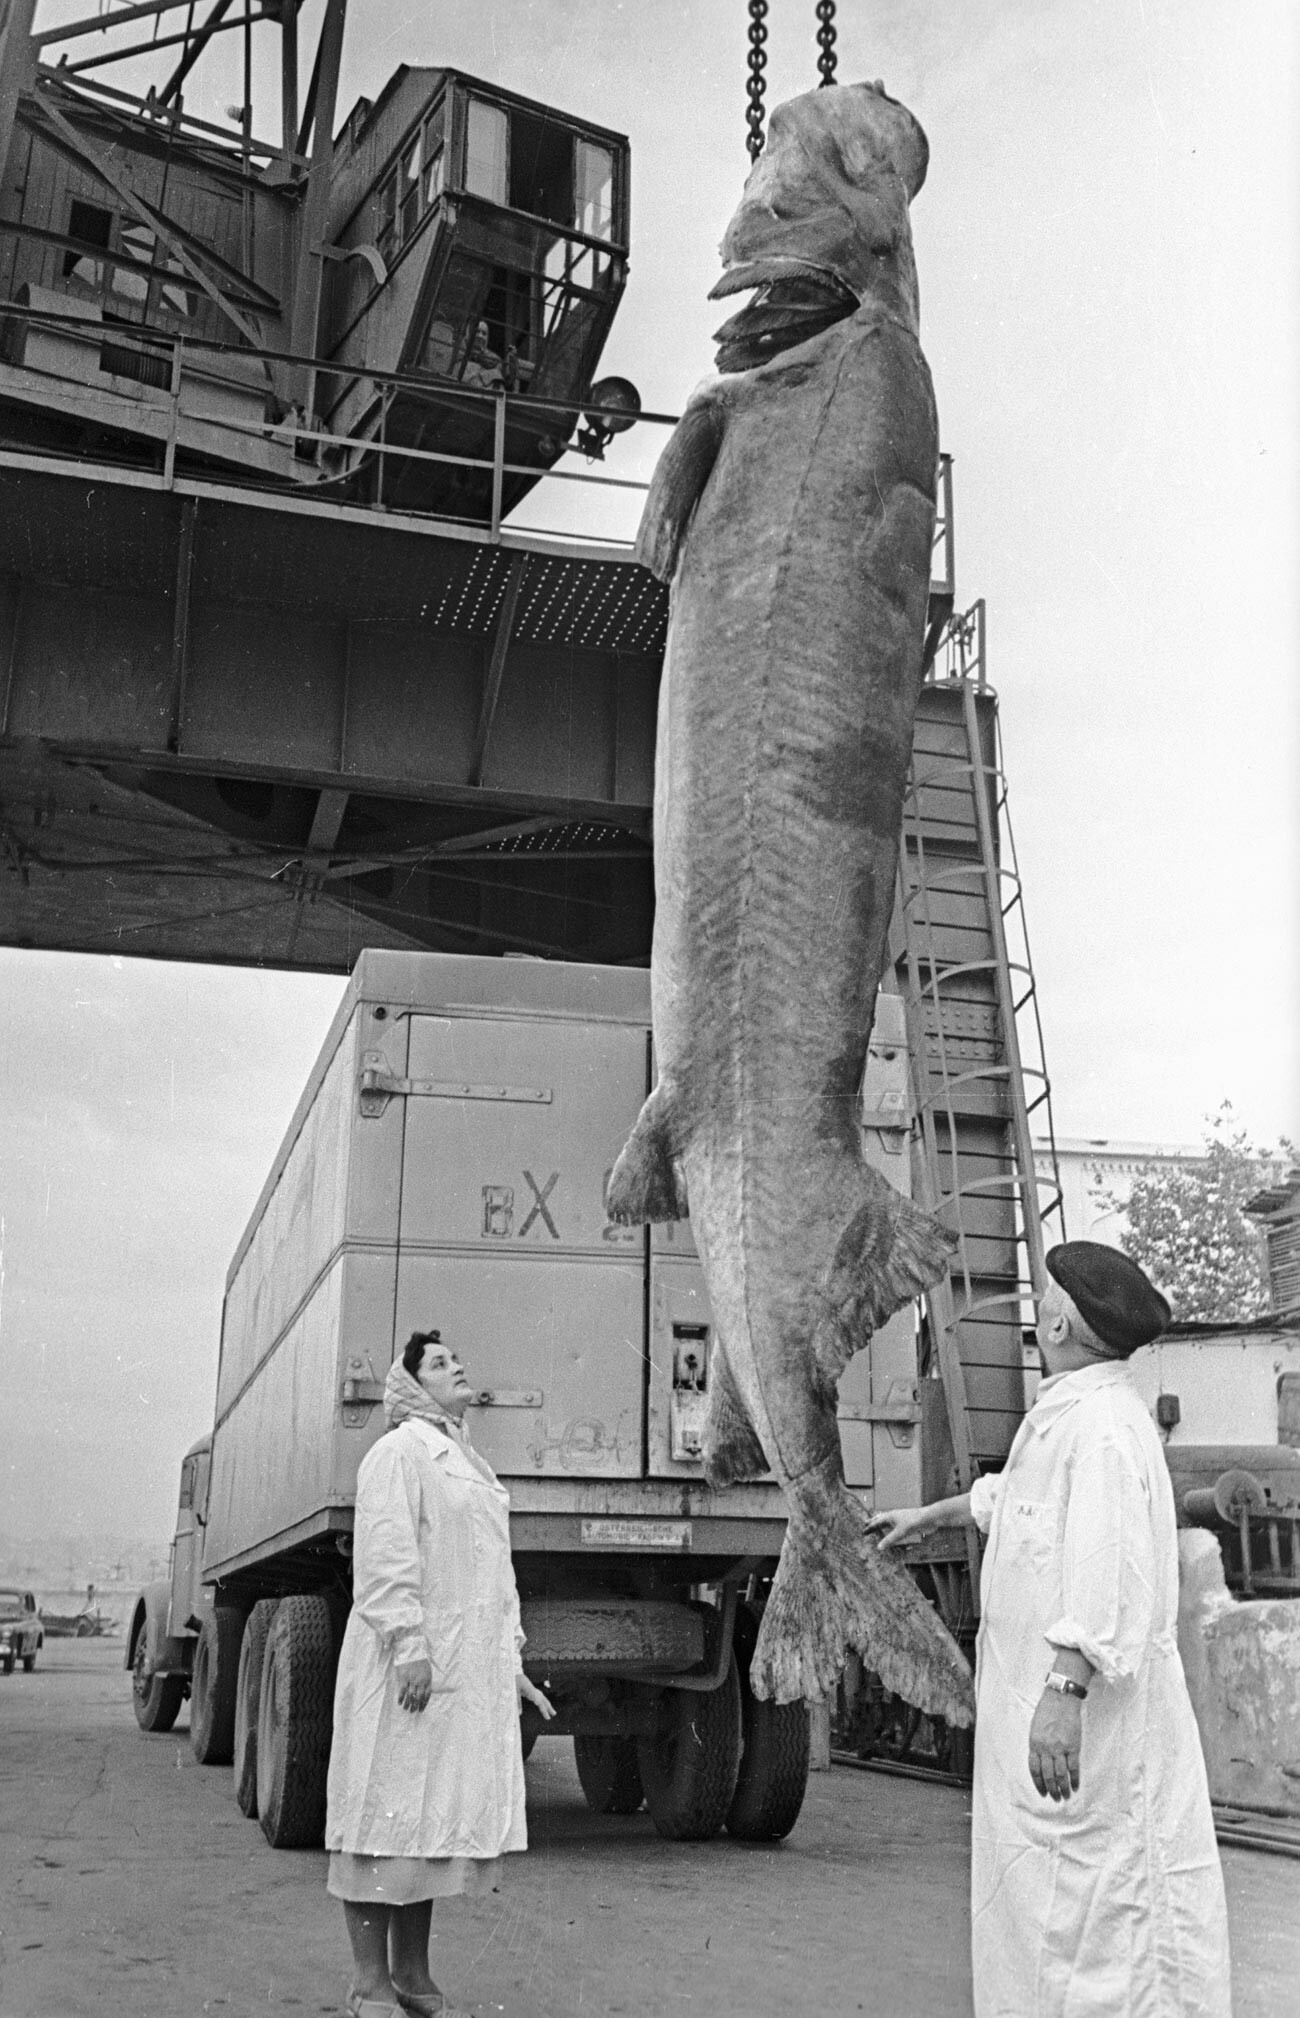 Un beluga dal peso di 800 kg